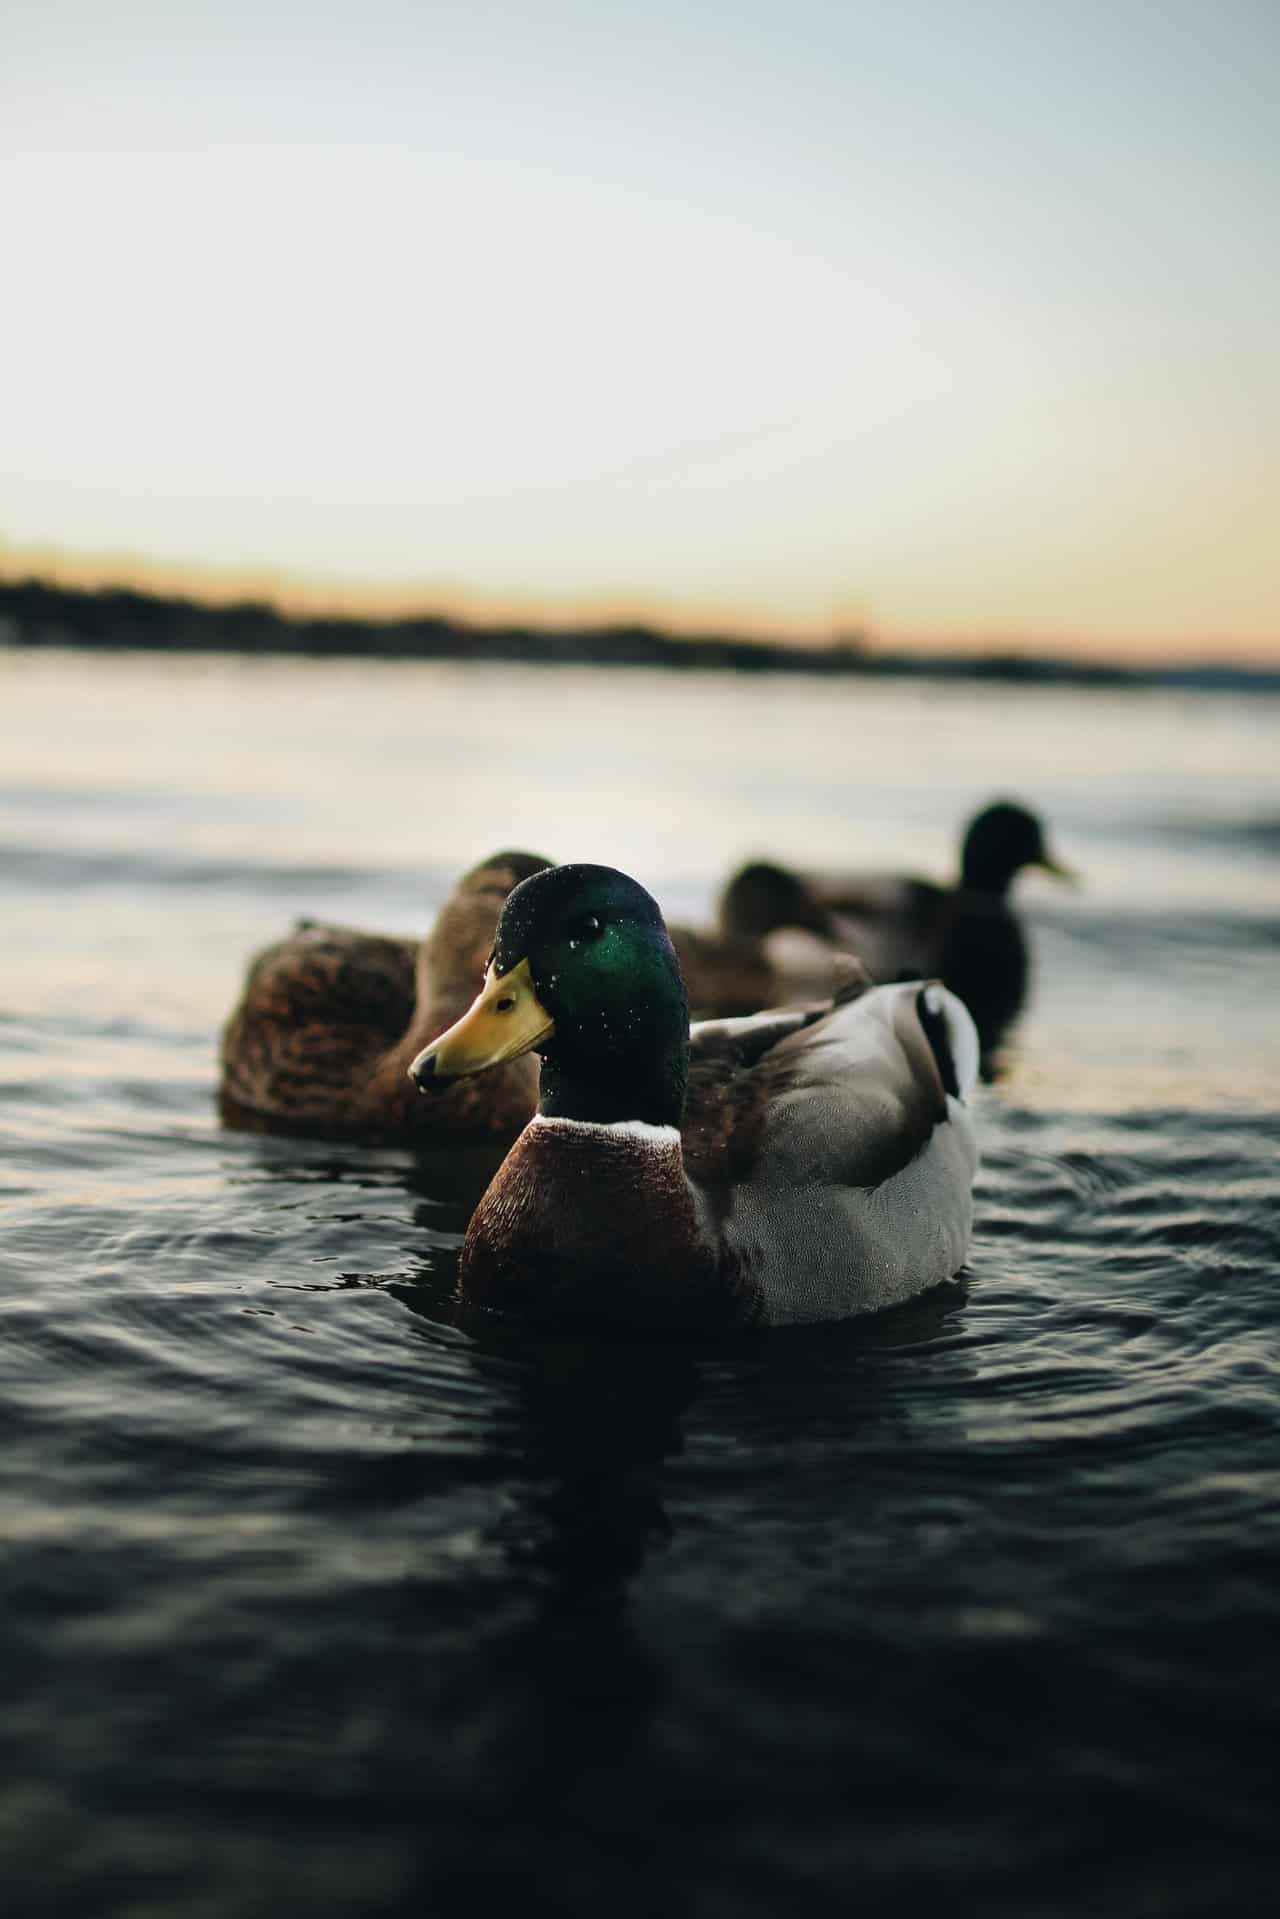 mallard duck on water illustrating mental feeling